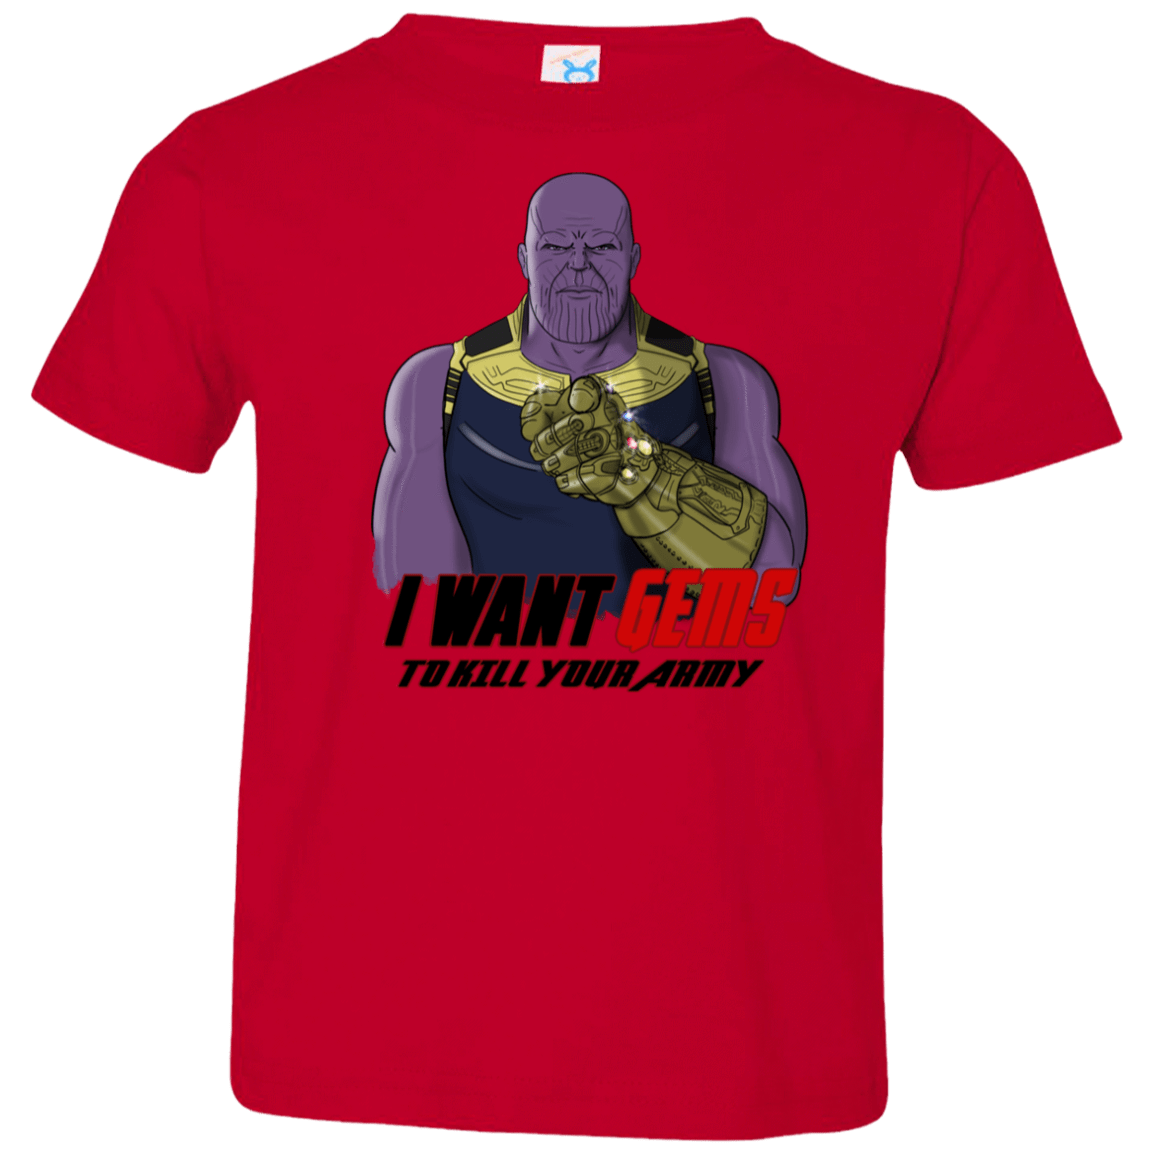 T-Shirts Red / 2T Thanos Sam Toddler Premium T-Shirt